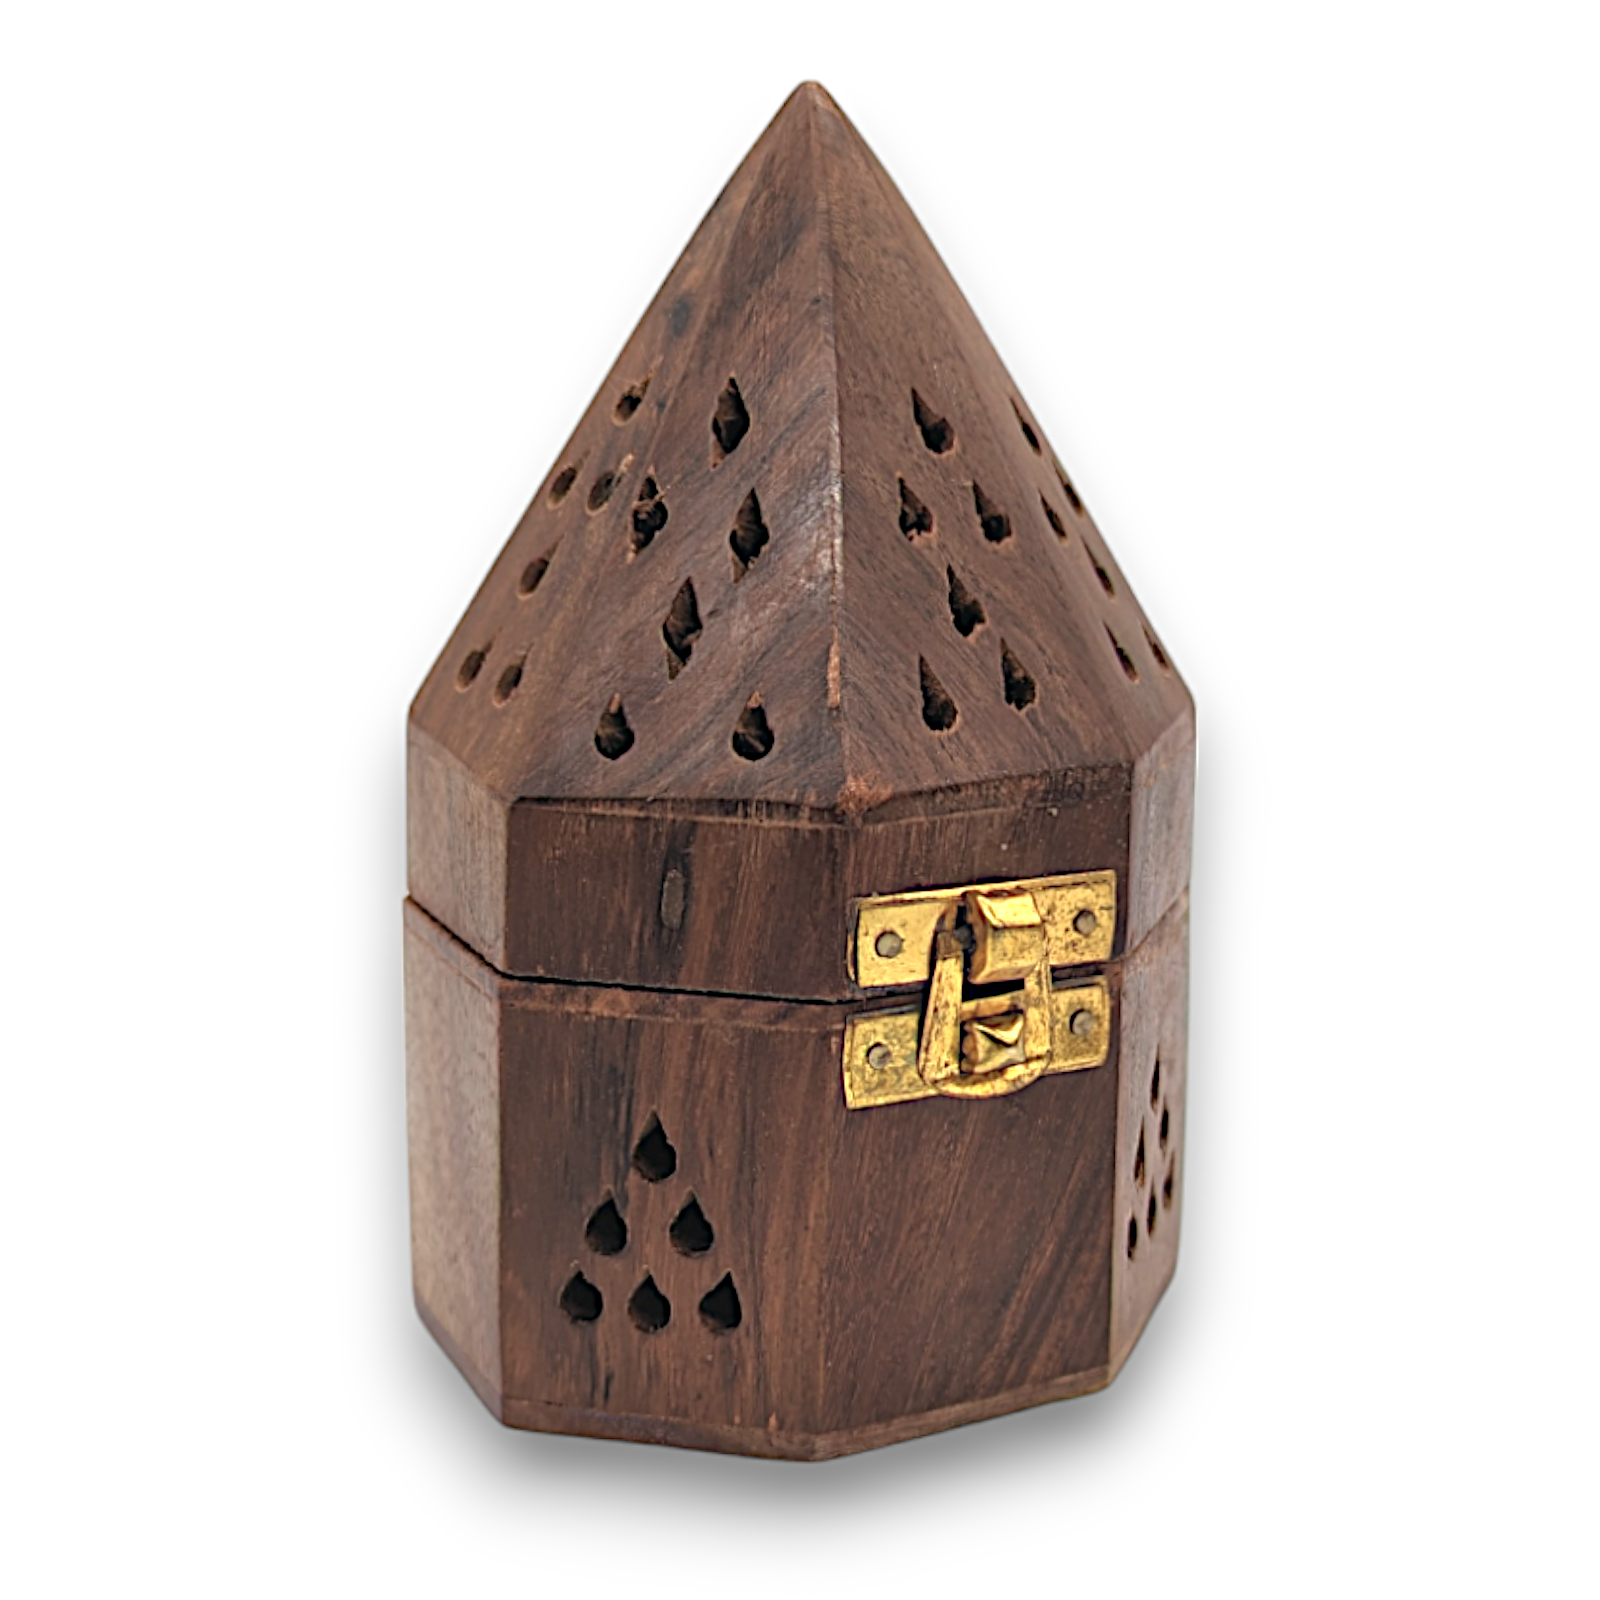 Wooden temple cone burner